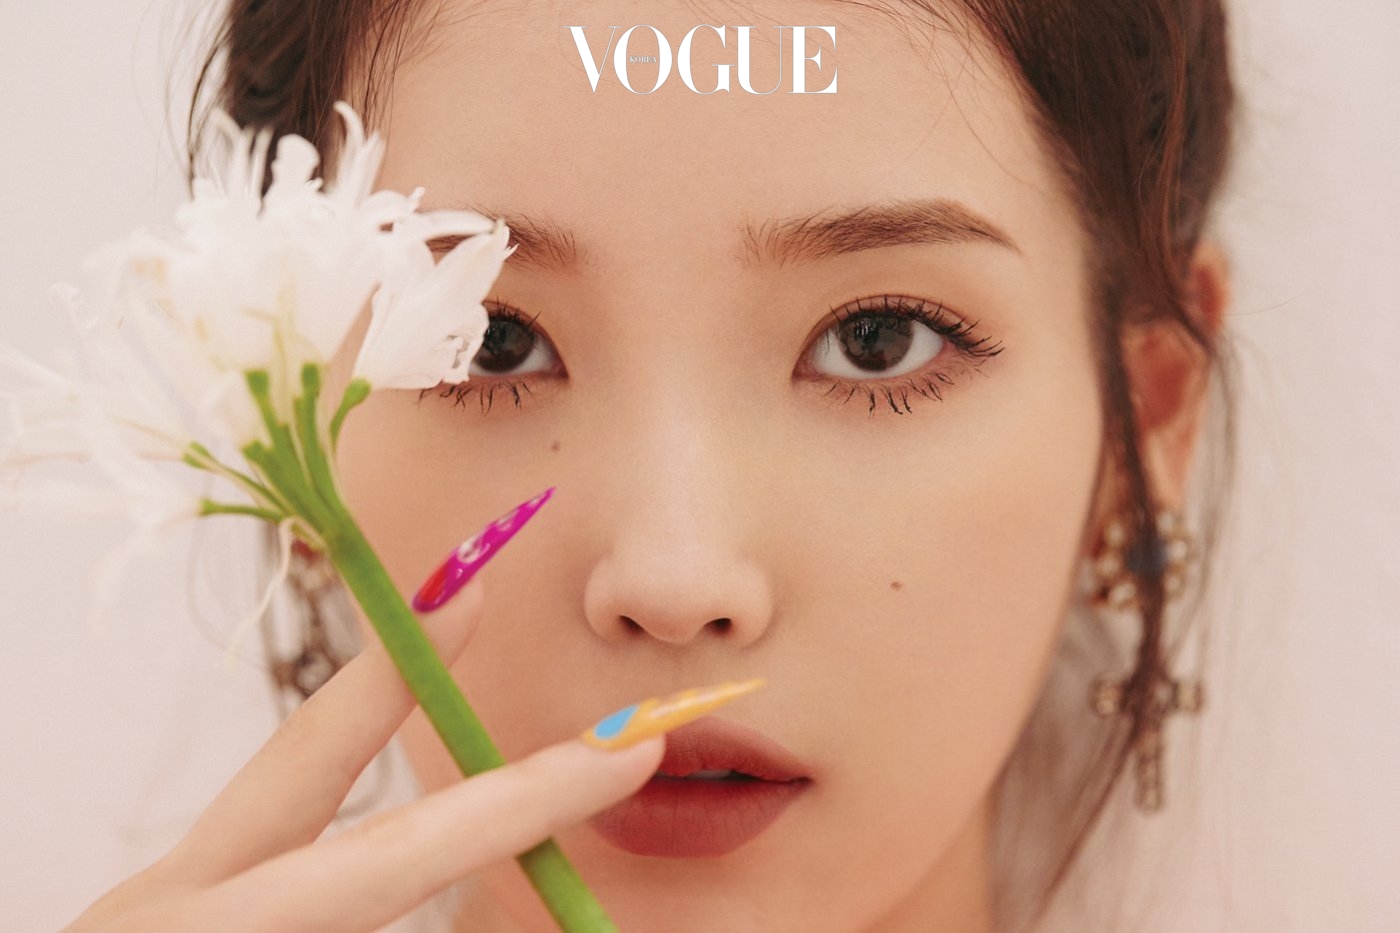 IU Face Vogue Magazine Closeup Asian Korean Women K Pop 1400x933